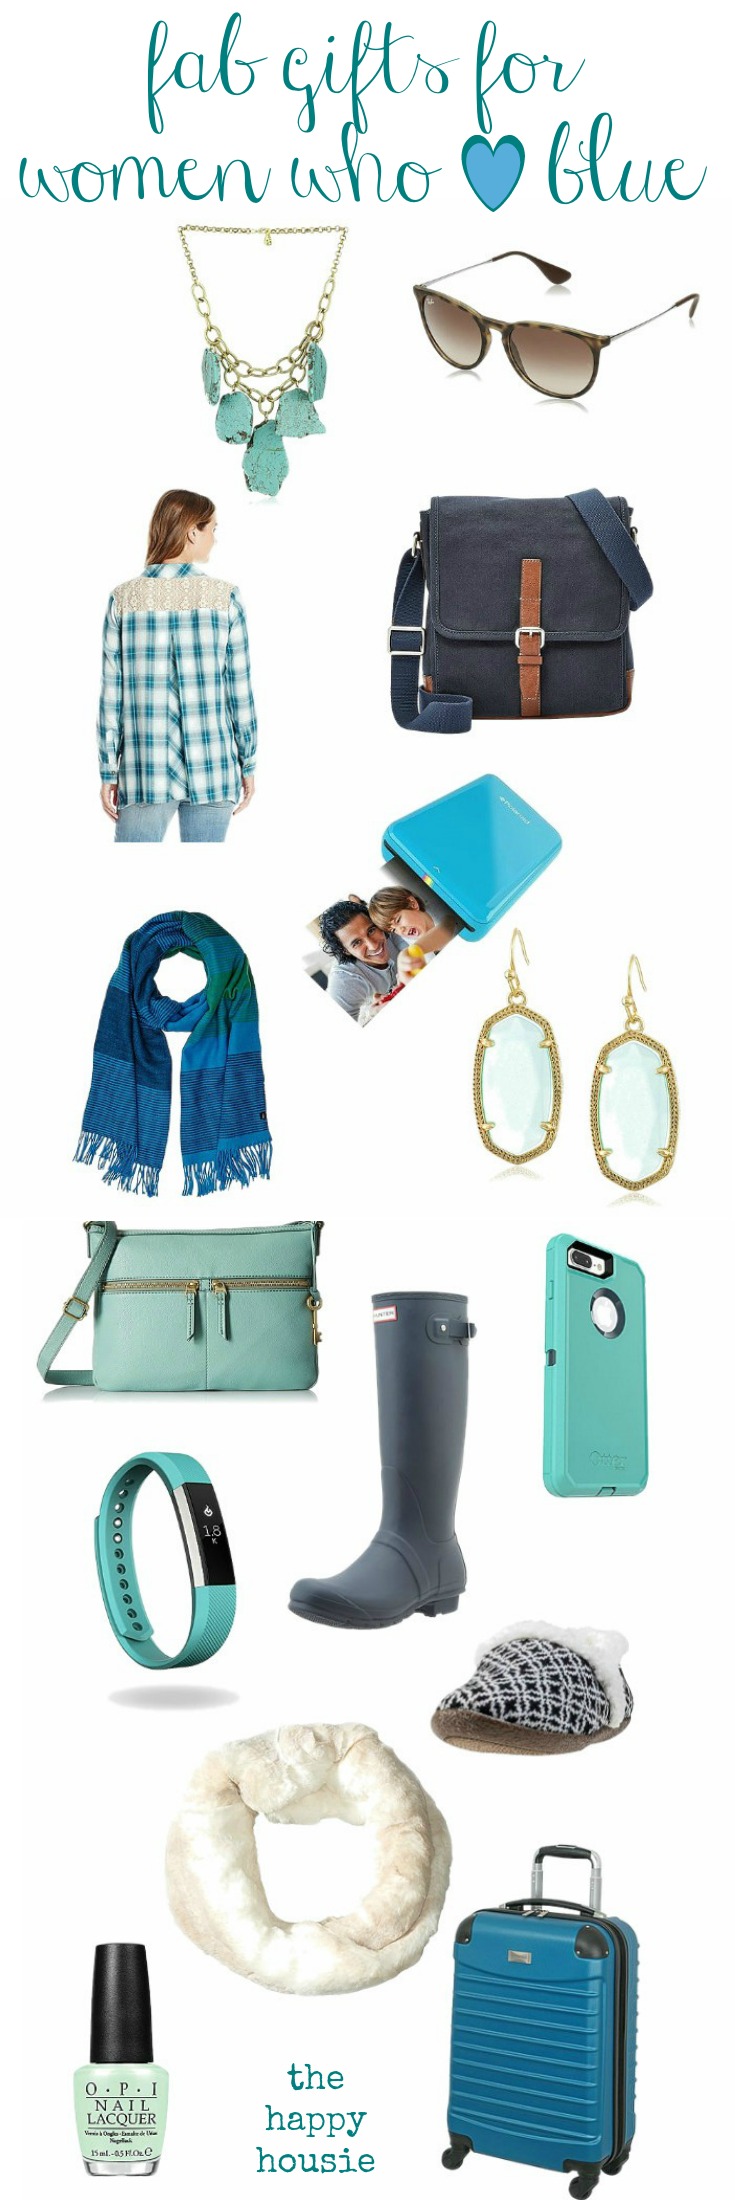 fabulous-gift-ideas-for-women-who-love-blue